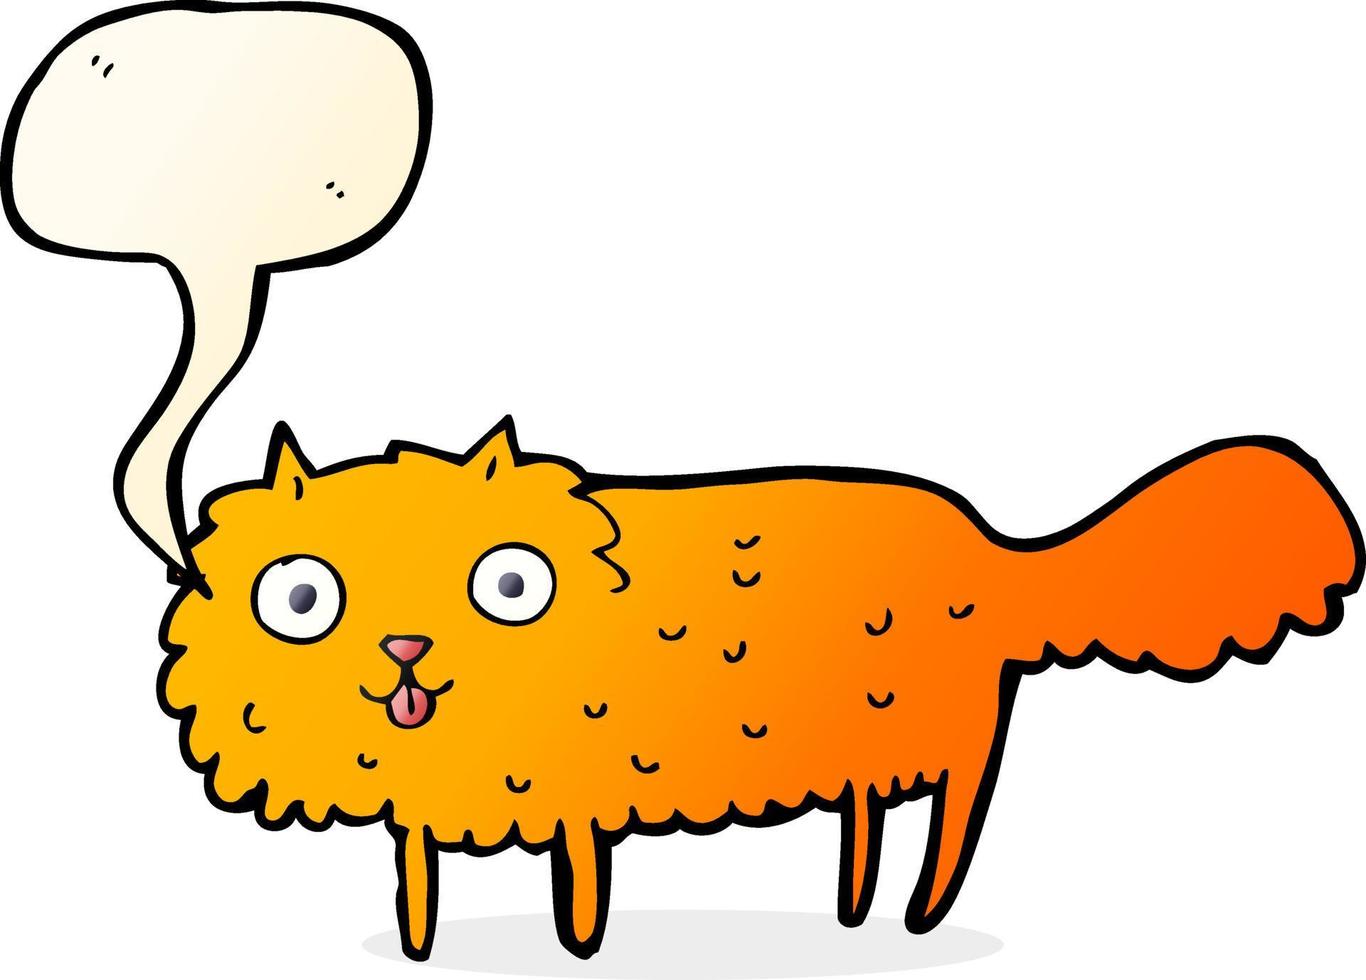 gato peludo de dibujos animados con burbujas de discurso vector